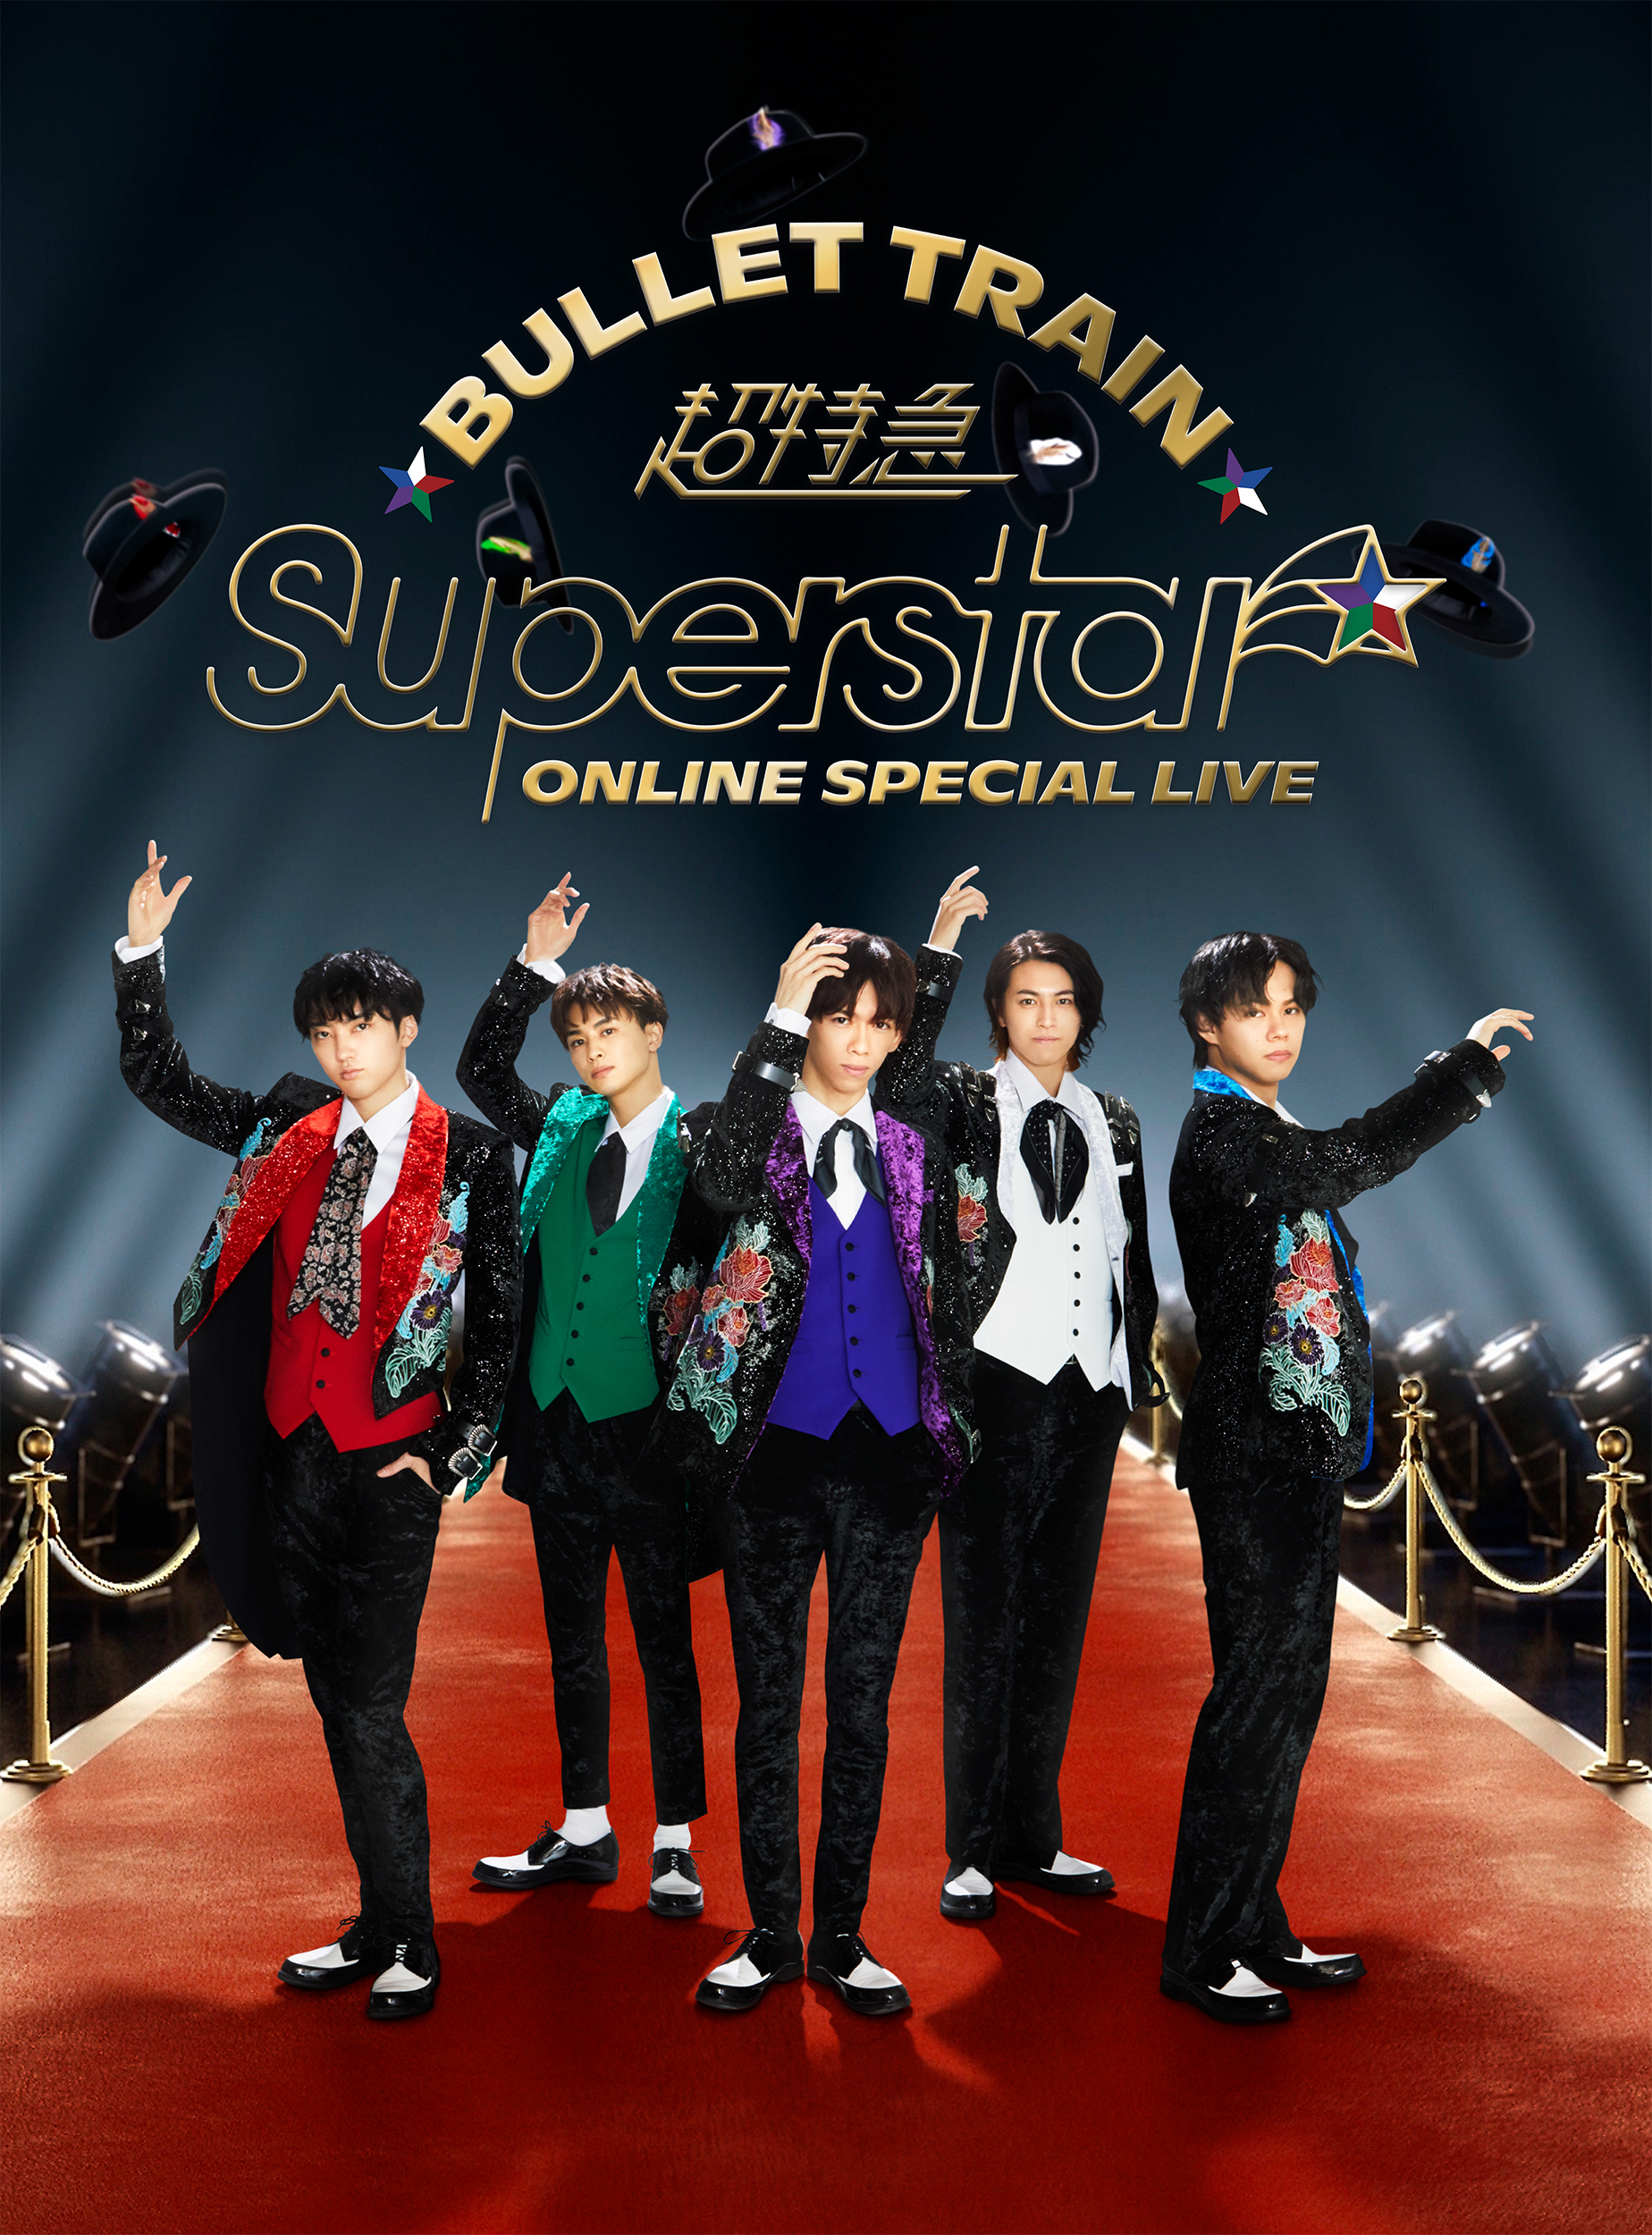 Blu-ray「BULLET TRAIN ONLINE SPECIAL LIVE 「Superstar」」最終予約 